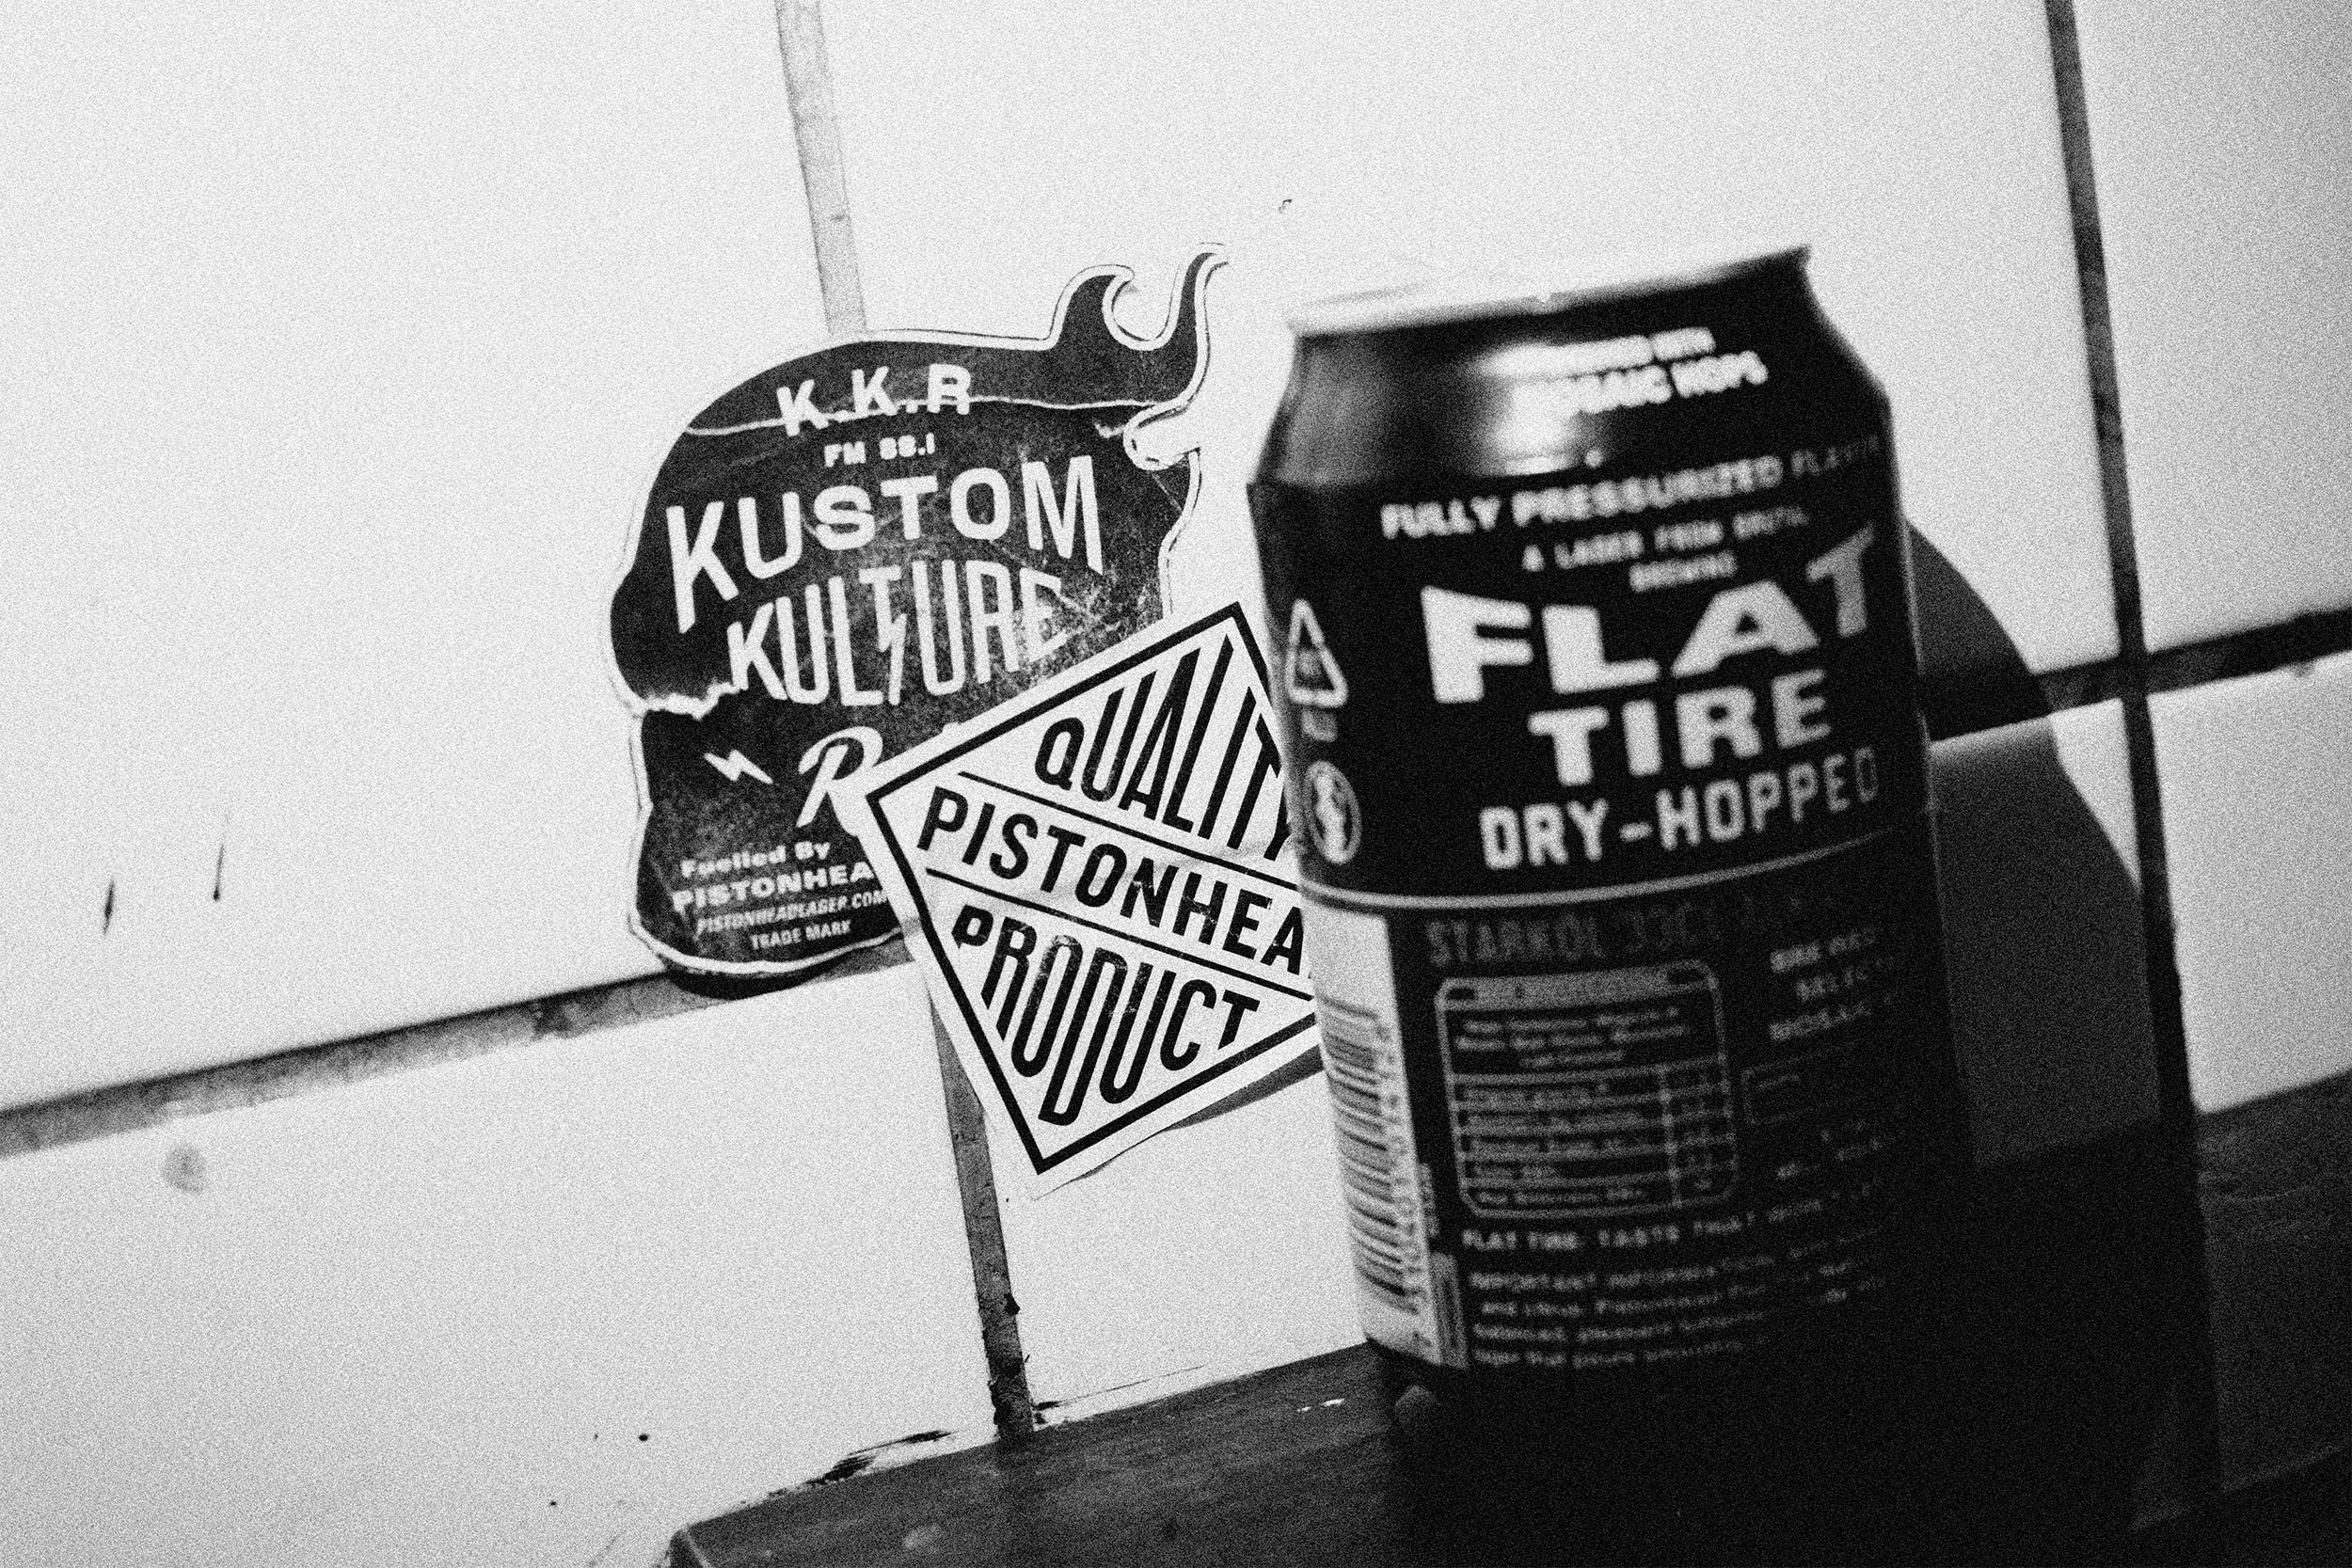 neumeister packaging design Pistonhead beer bottle stickers